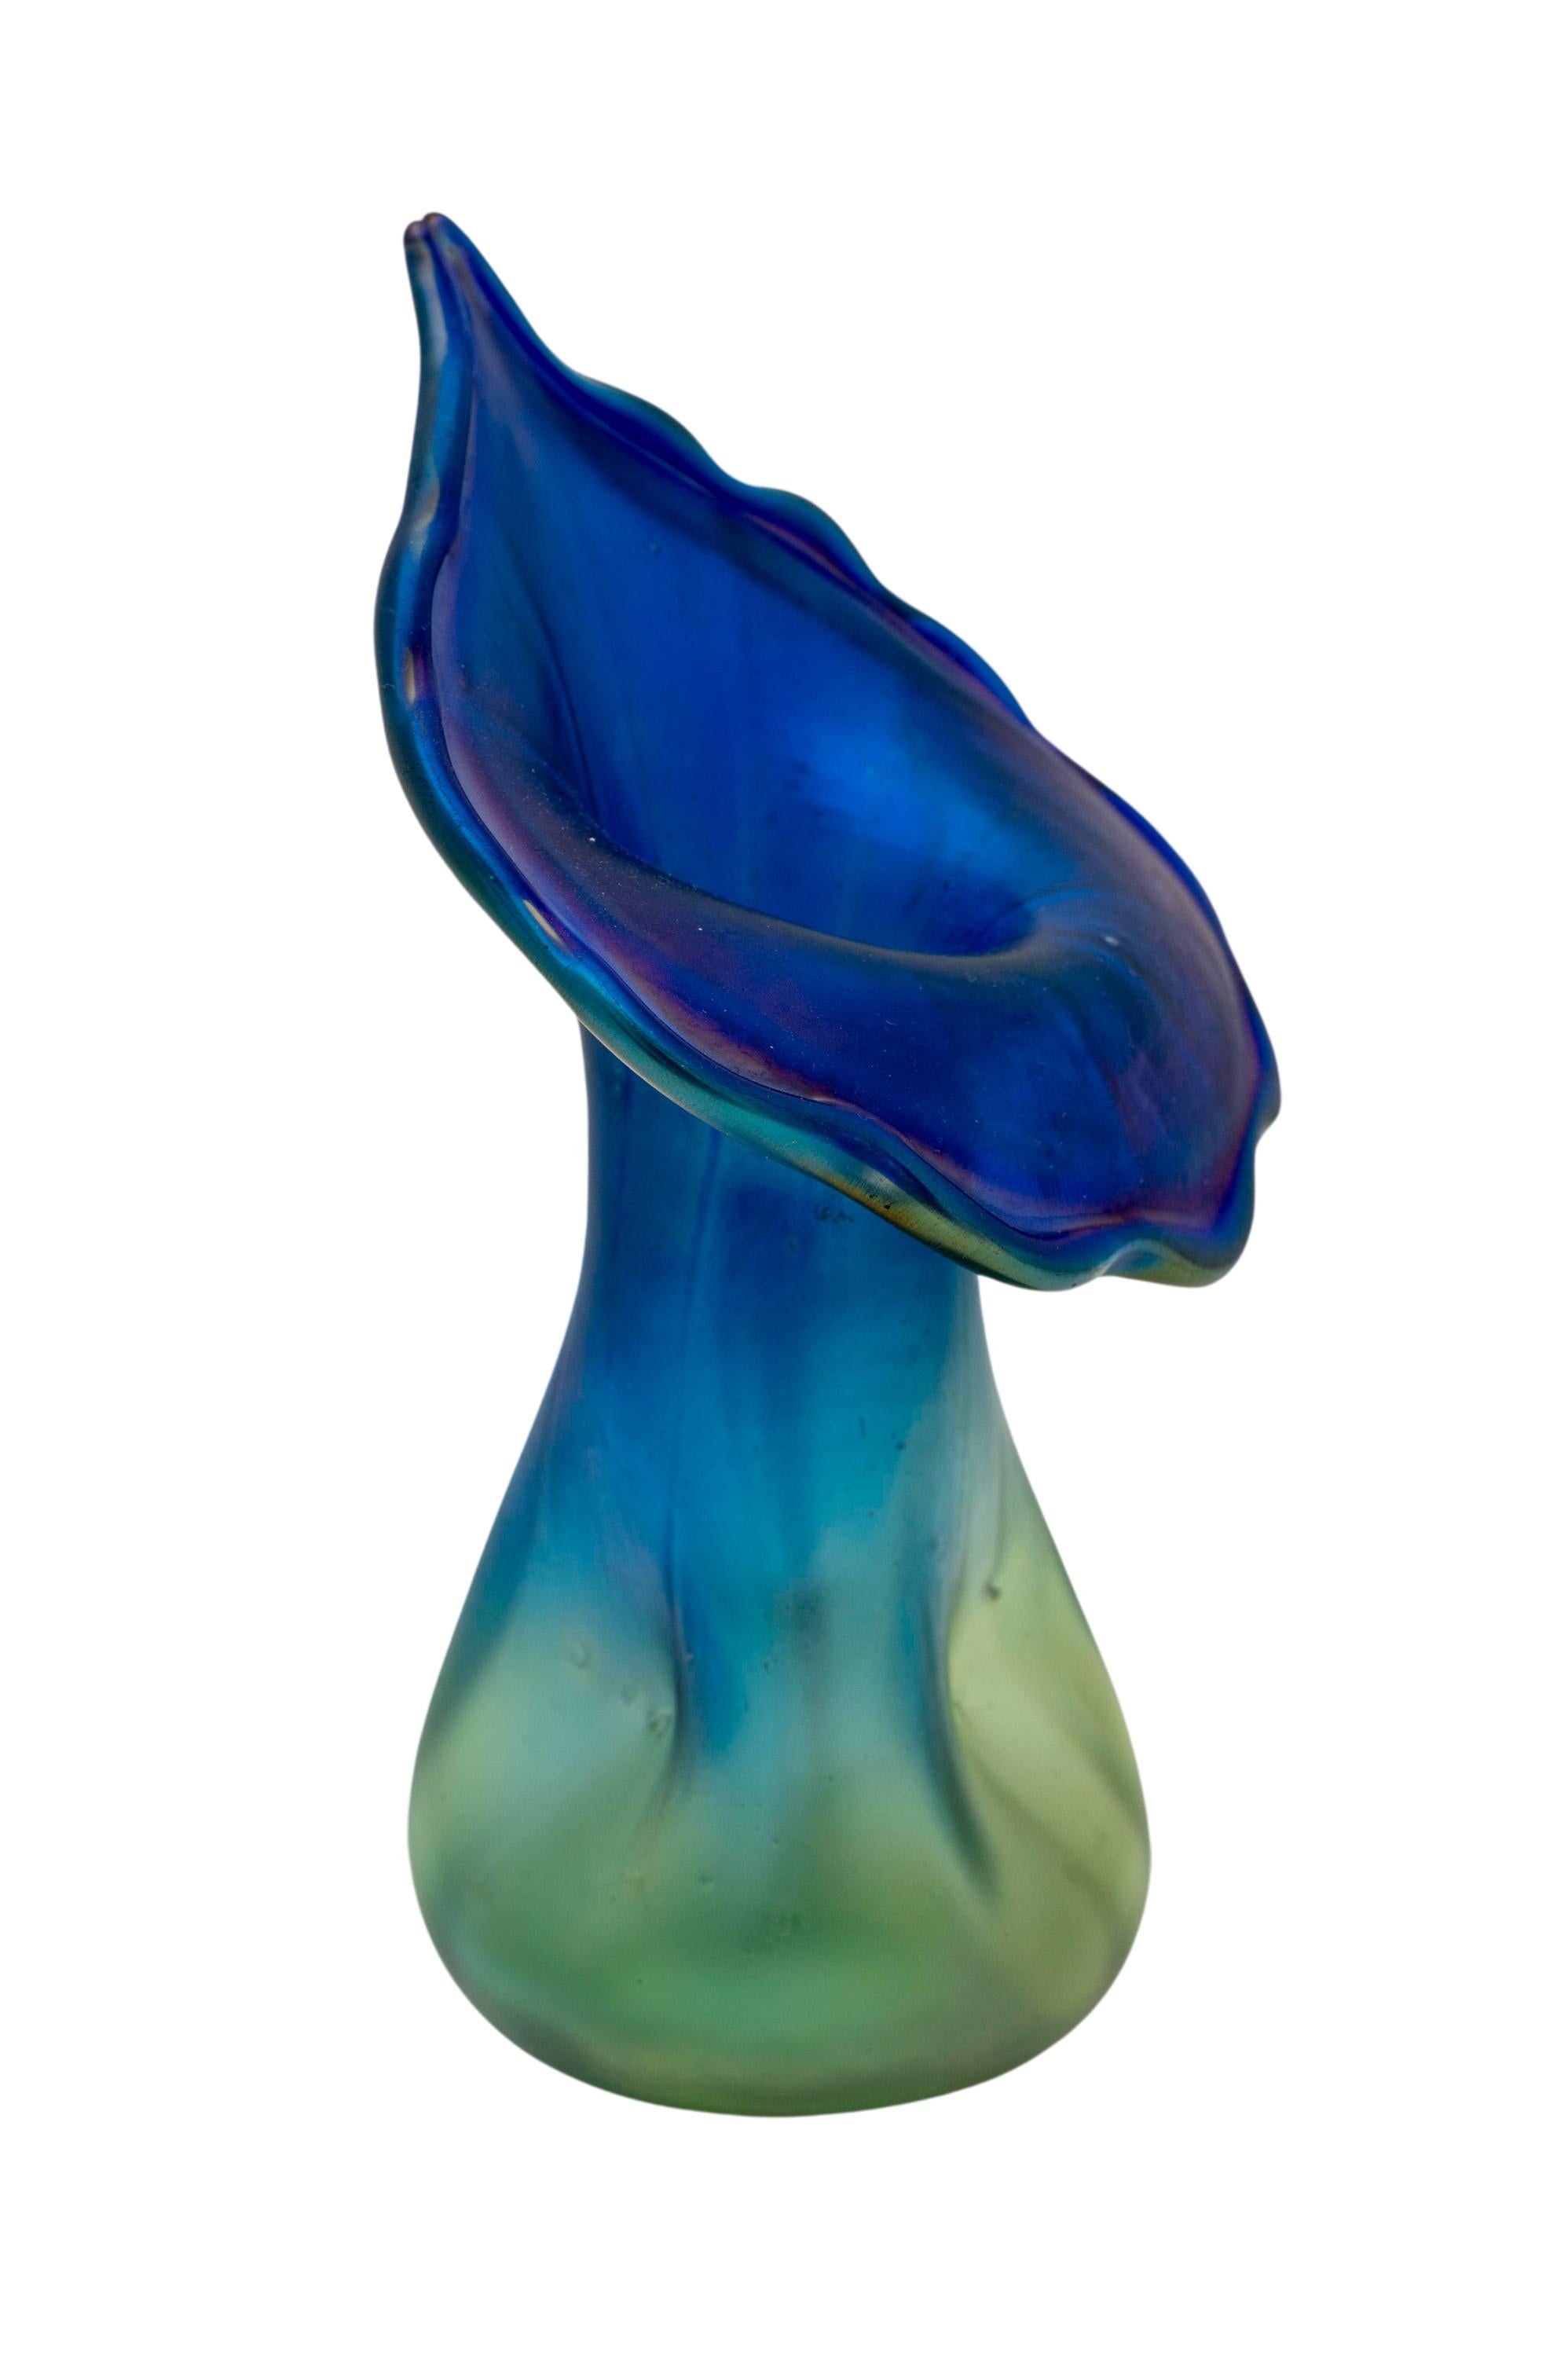 Antique Art Nouveau Glass Vase Loetz Luna Decoration 1901 Vienna Jugendstil Blue In Good Condition For Sale In Klosterneuburg, AT